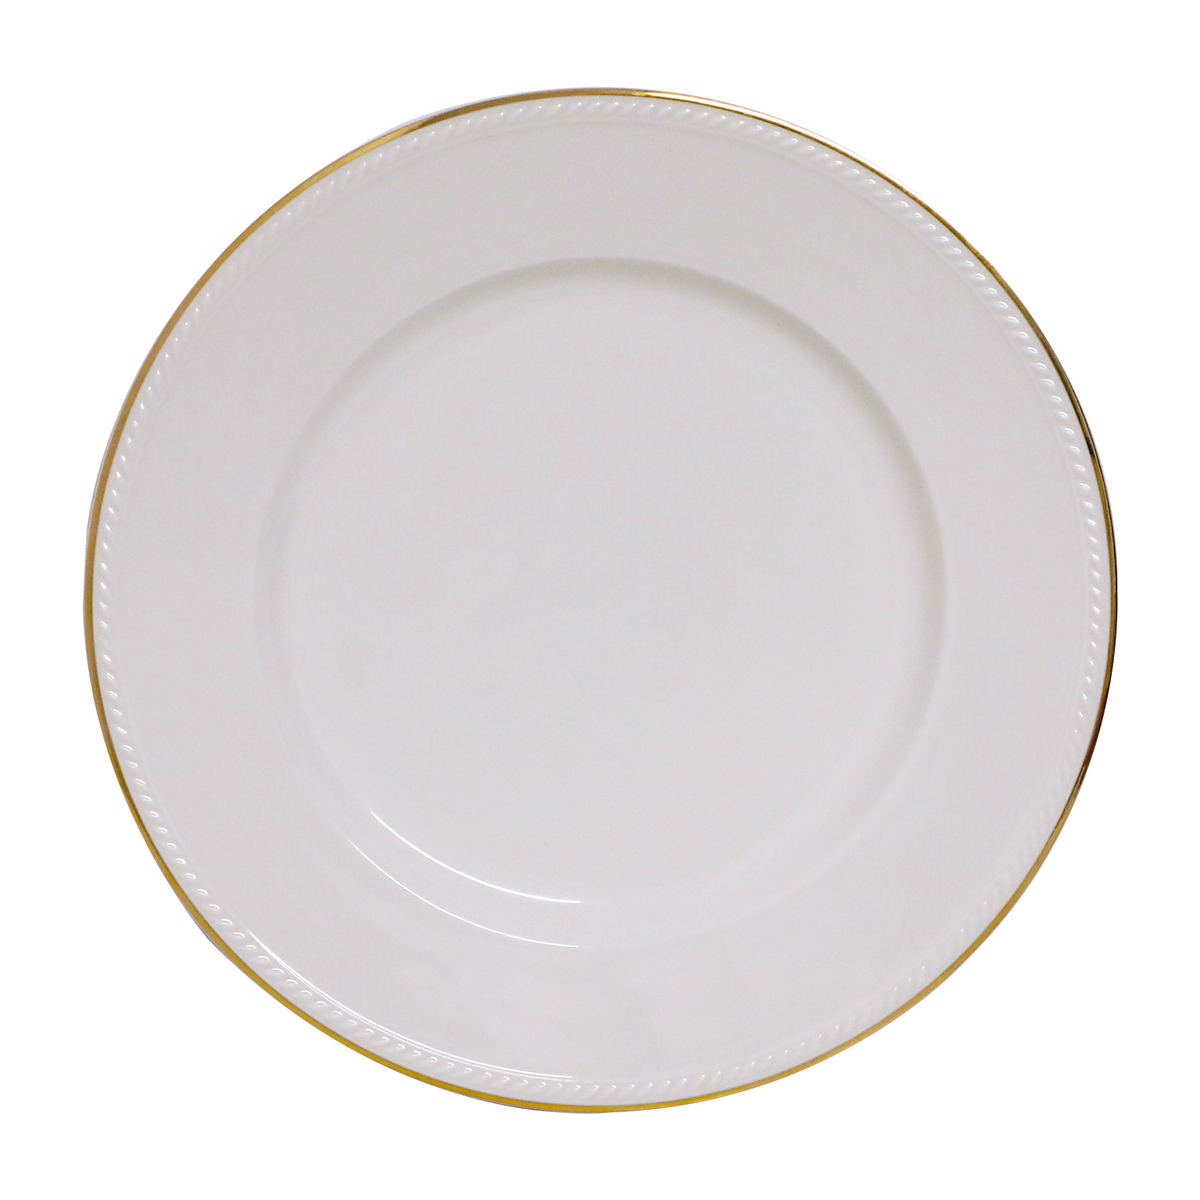 Qualitier Dinner Plate 27cm Gold IP3504